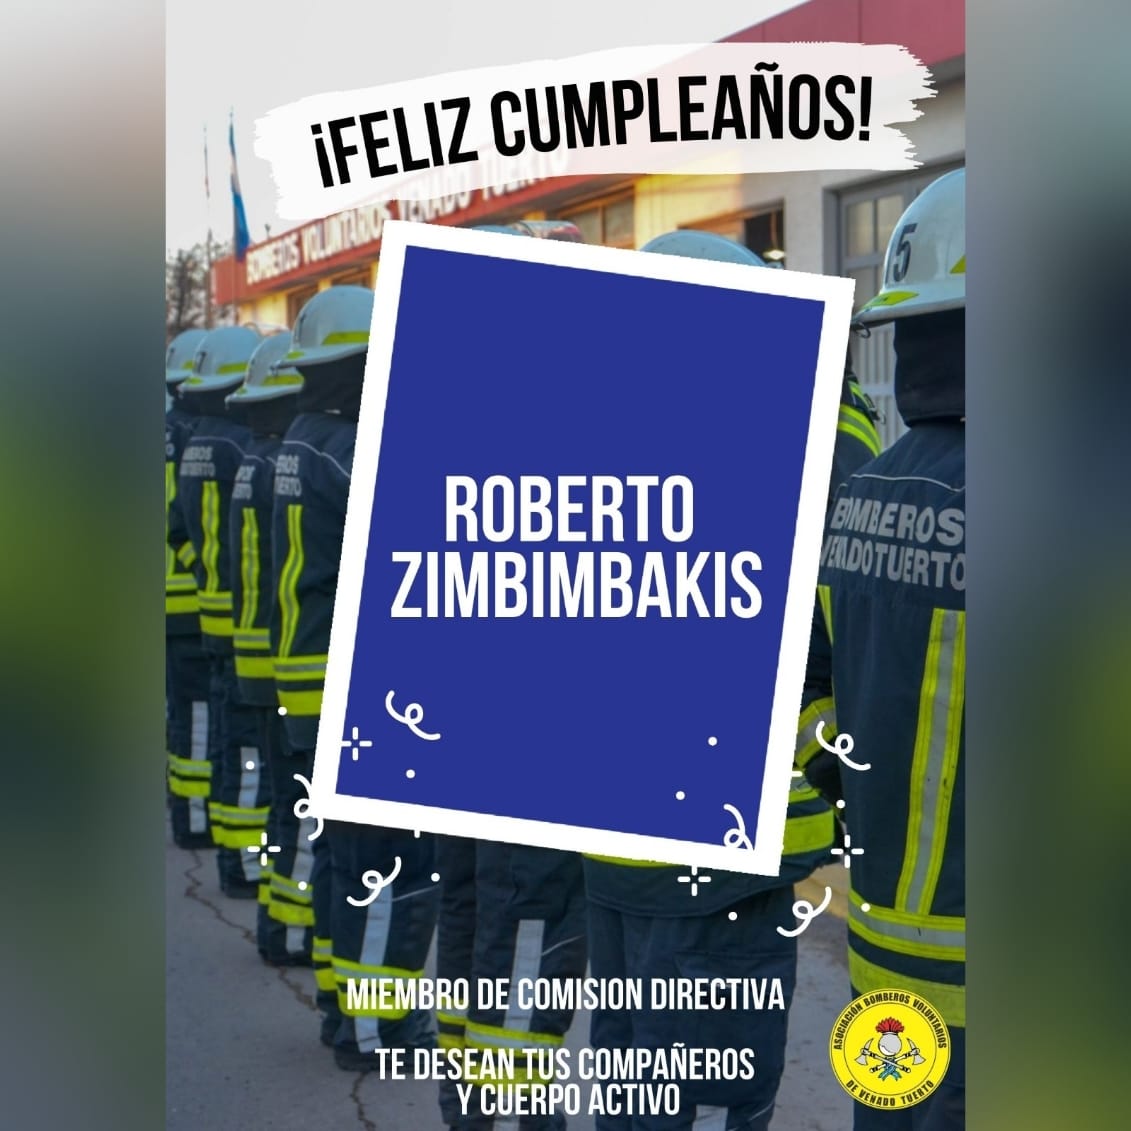 16 de Octubre | Cumpleaños de Roberto Zimbimbakis